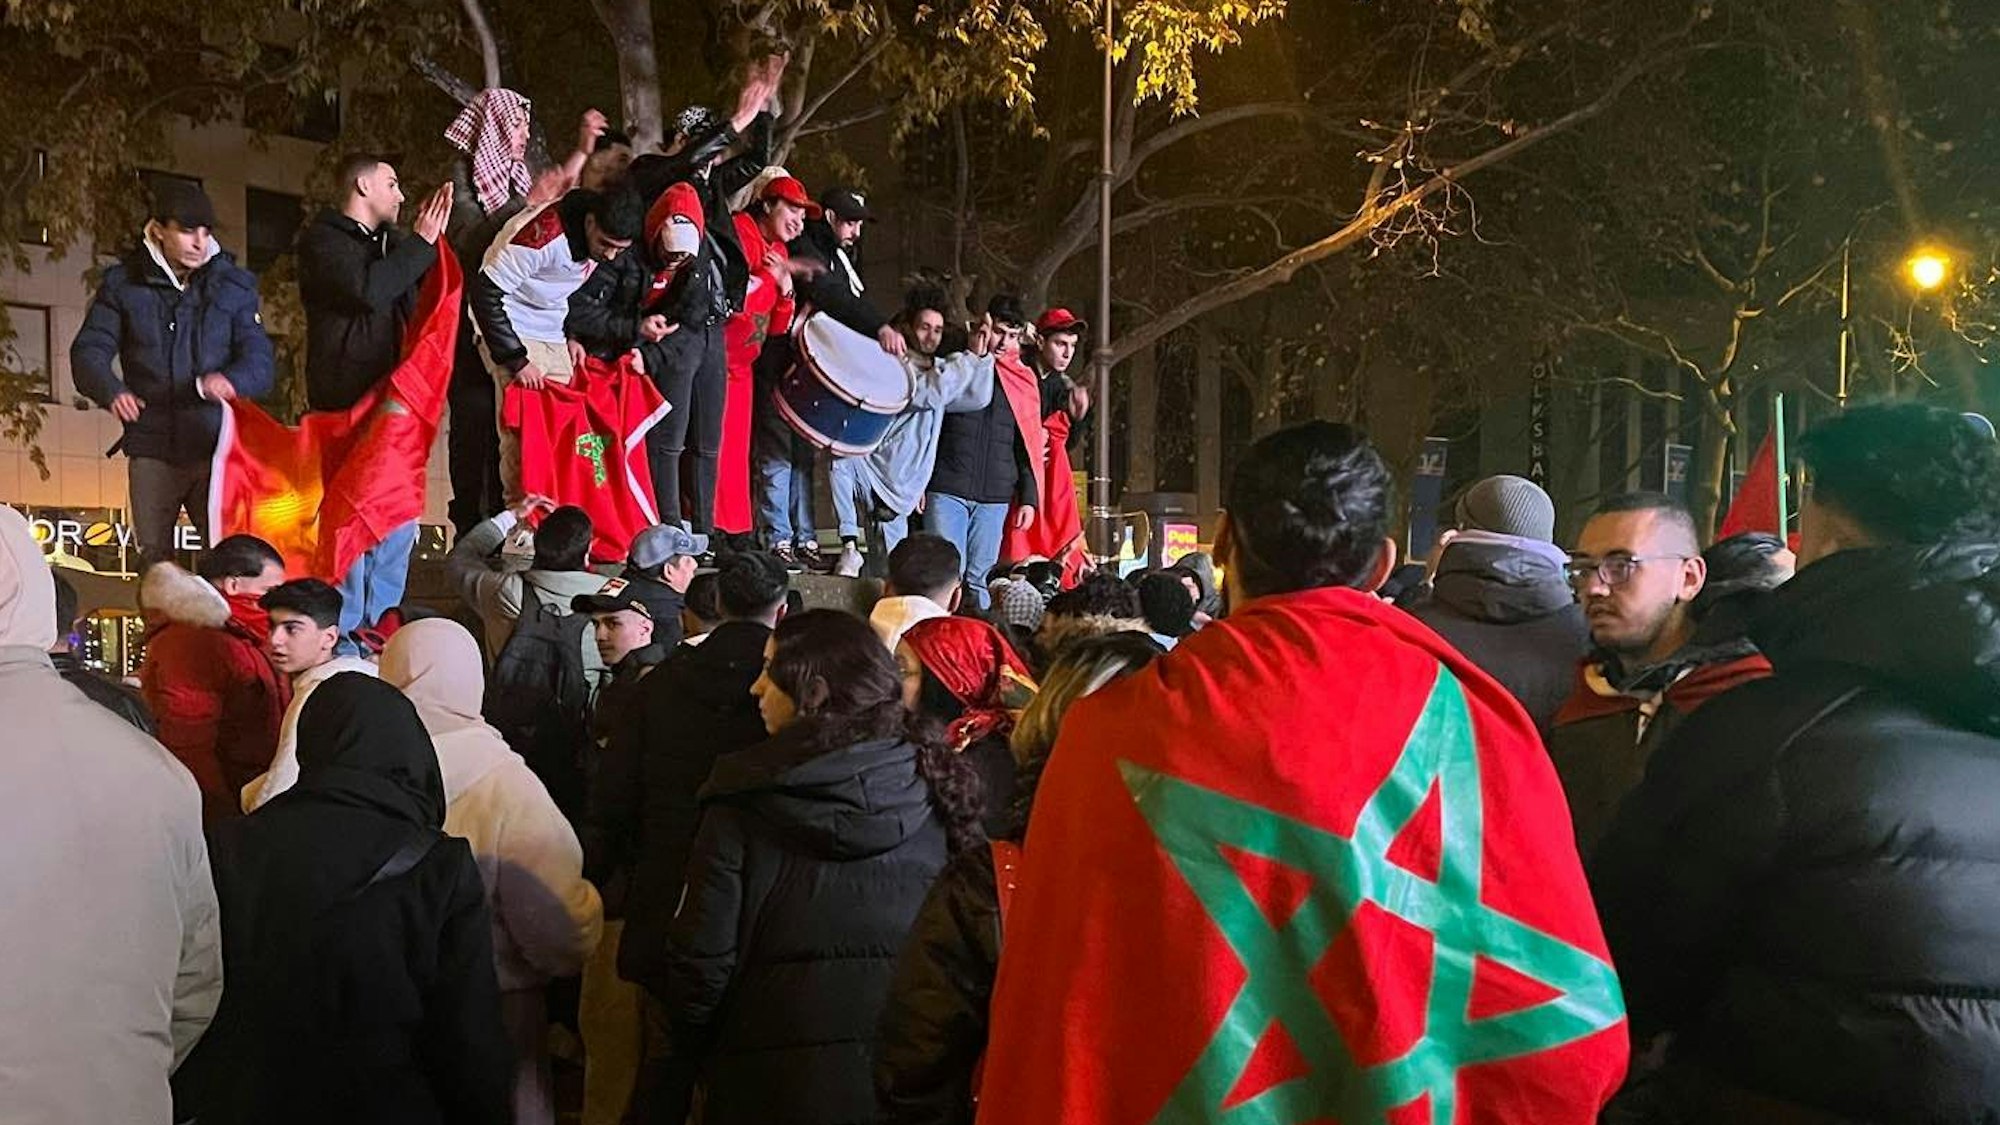 Marokko-Fans feiern in der Kölner Innenstadt